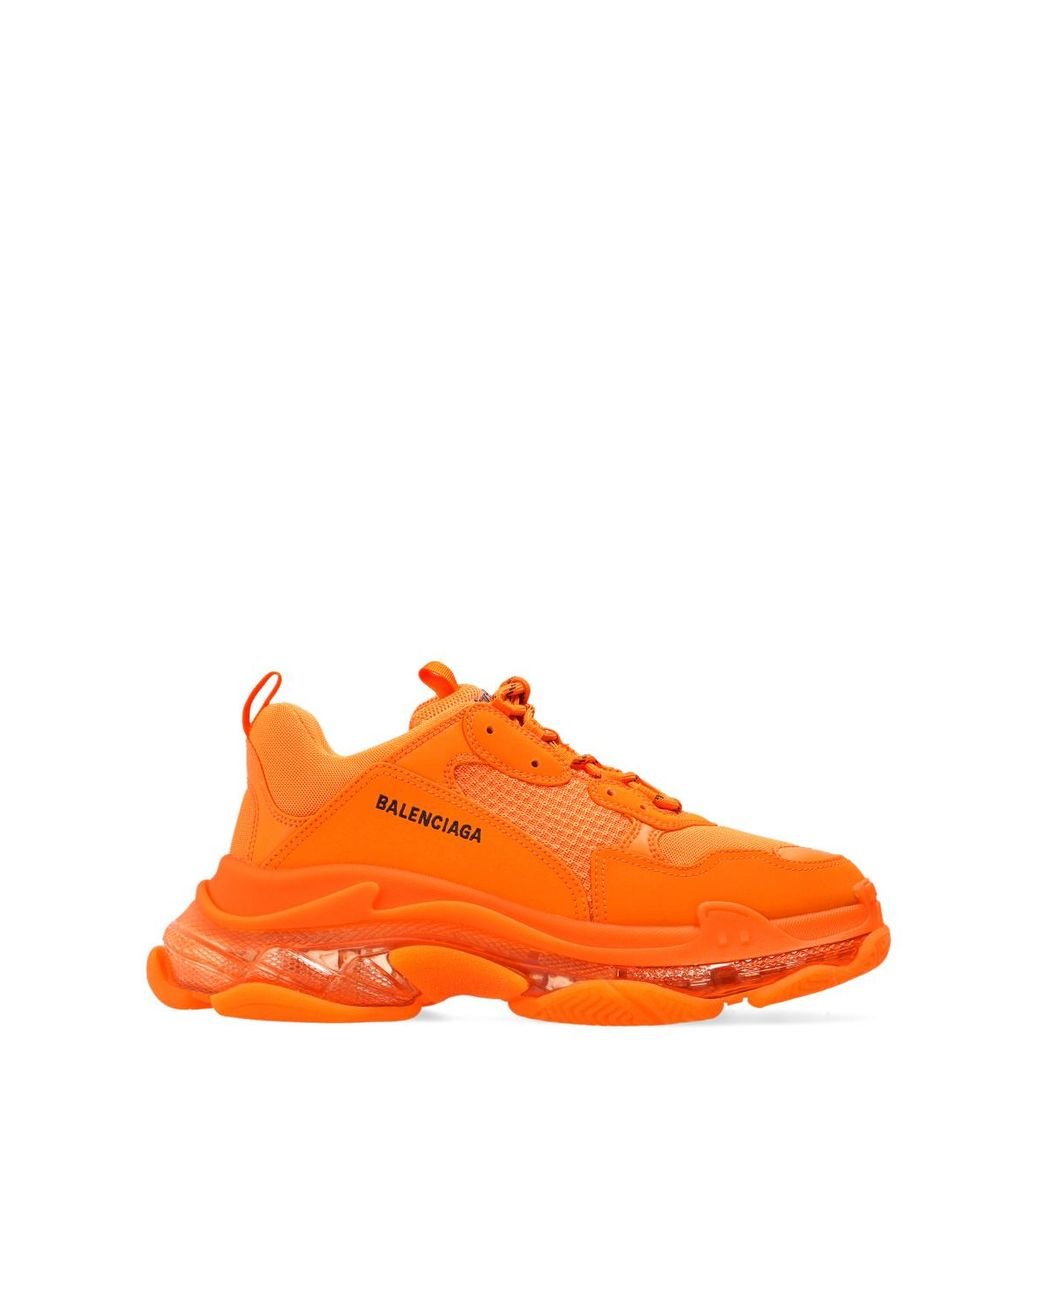 Balenciaga Triple S Clear Sole Orange  Sneakers Balenciaga shoes mens  Sneakers fashion